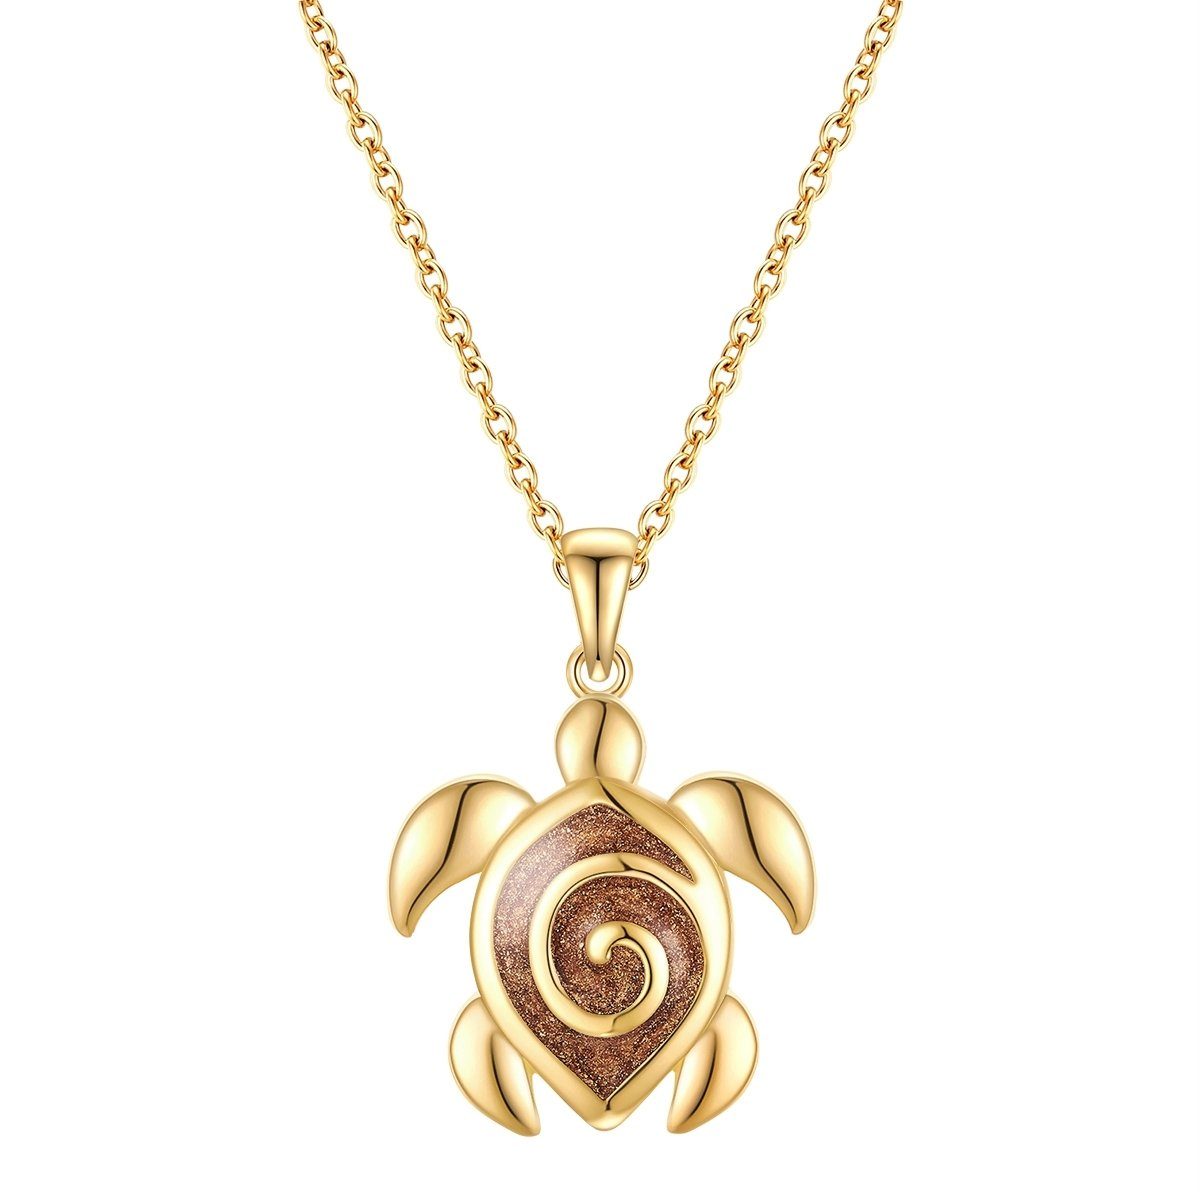 Rafaela Donata Silberkette Schildkröte gelbgold, mit Motiv Schildkröte | Silberketten